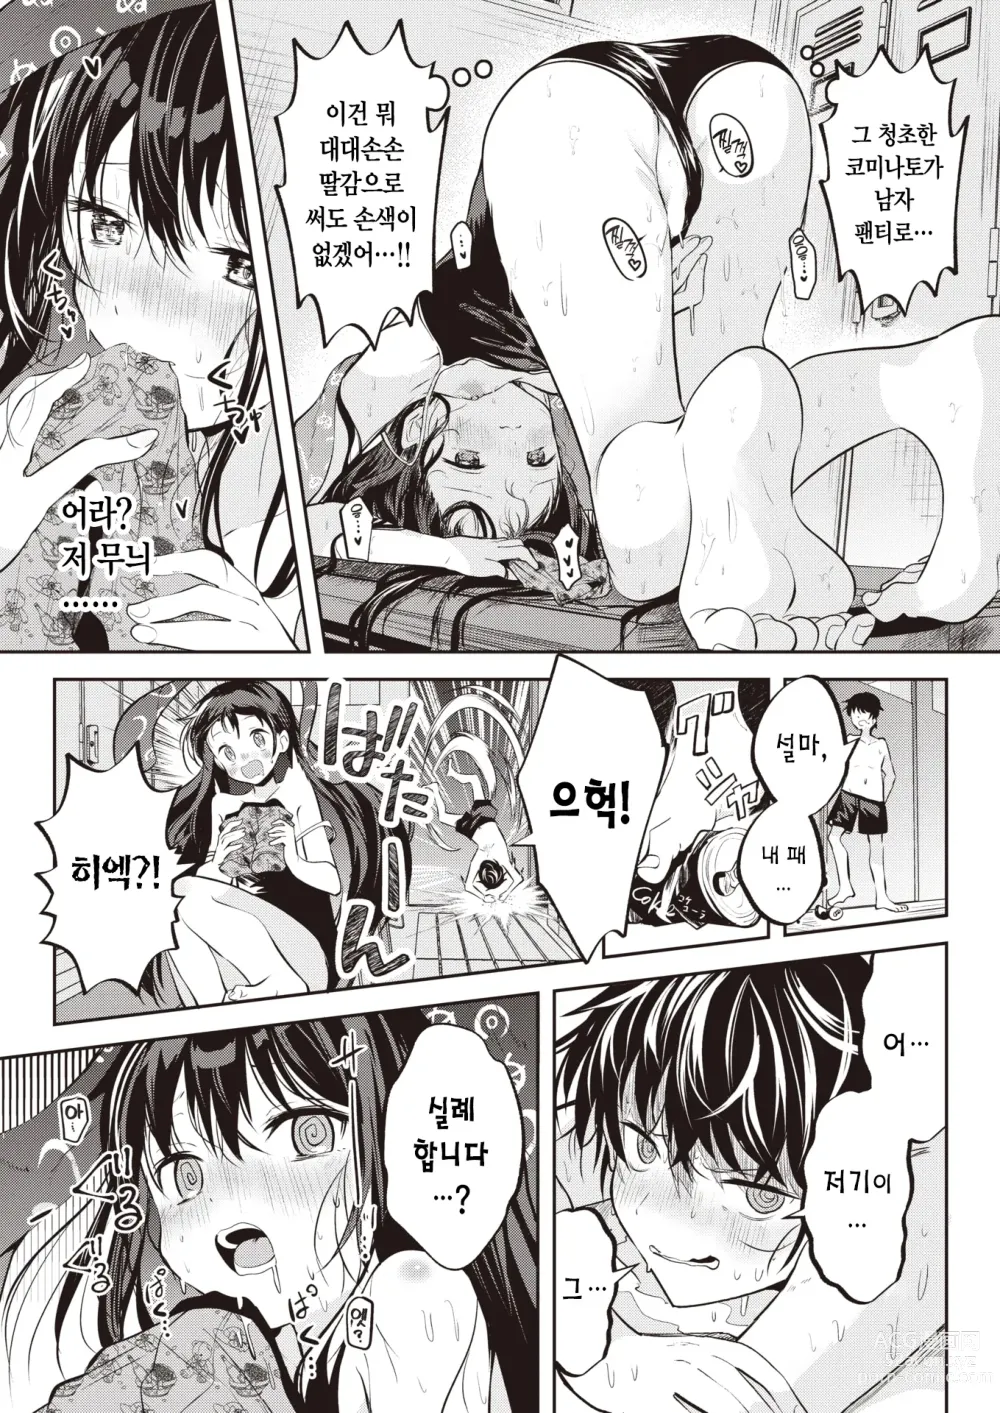 Page 8 of manga 처녀의 미열은 양열지극.